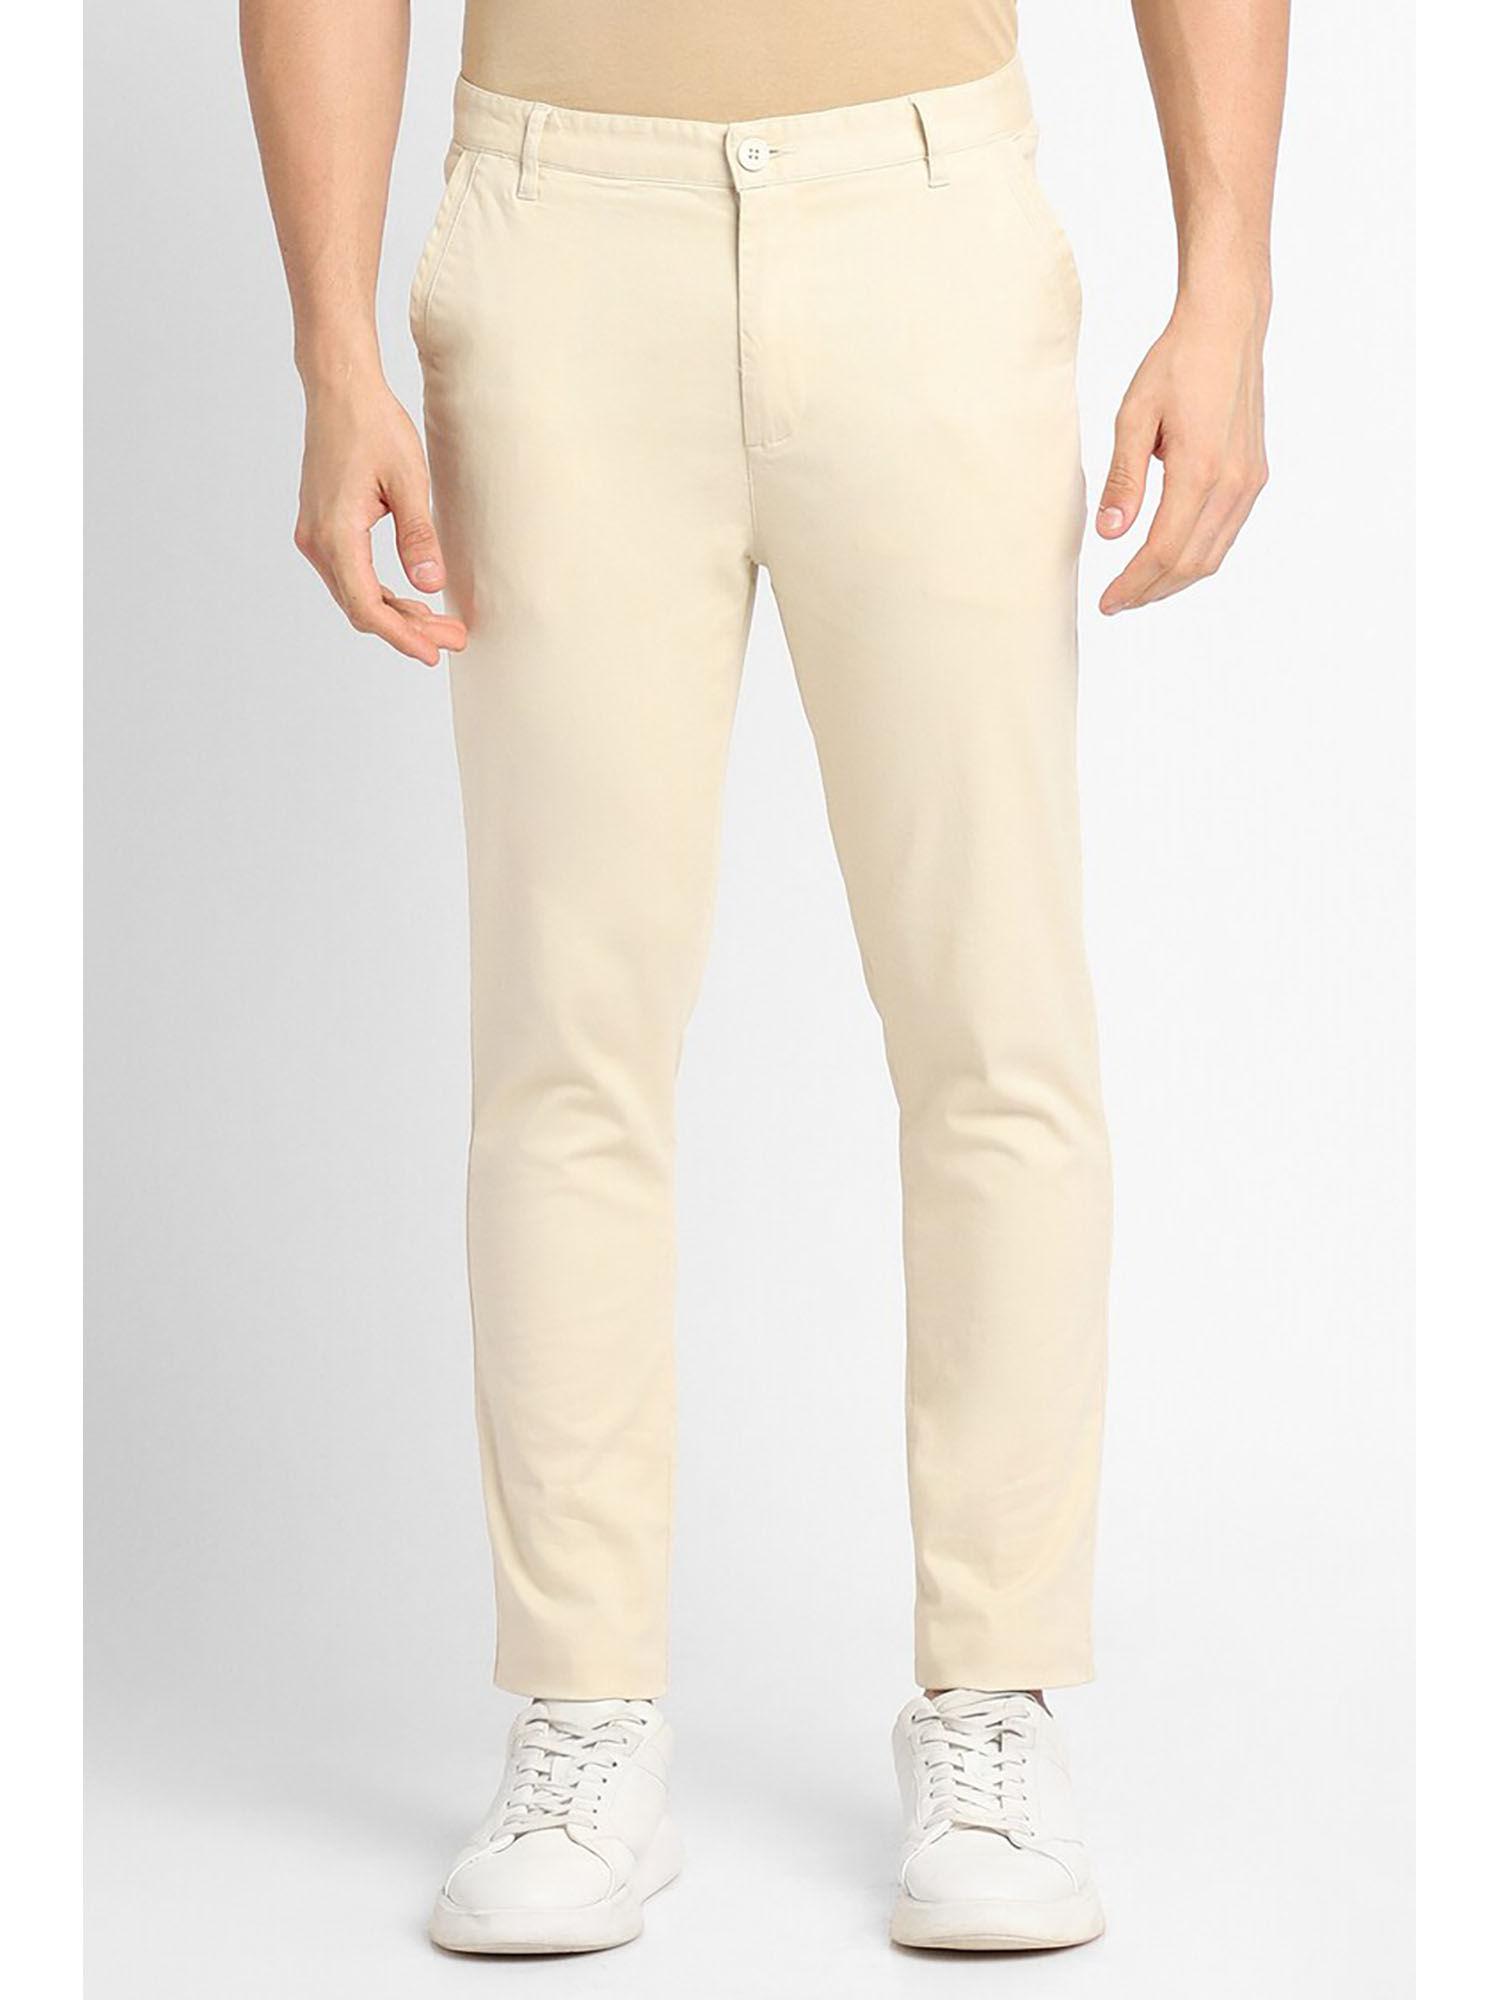 solid-cream-pants